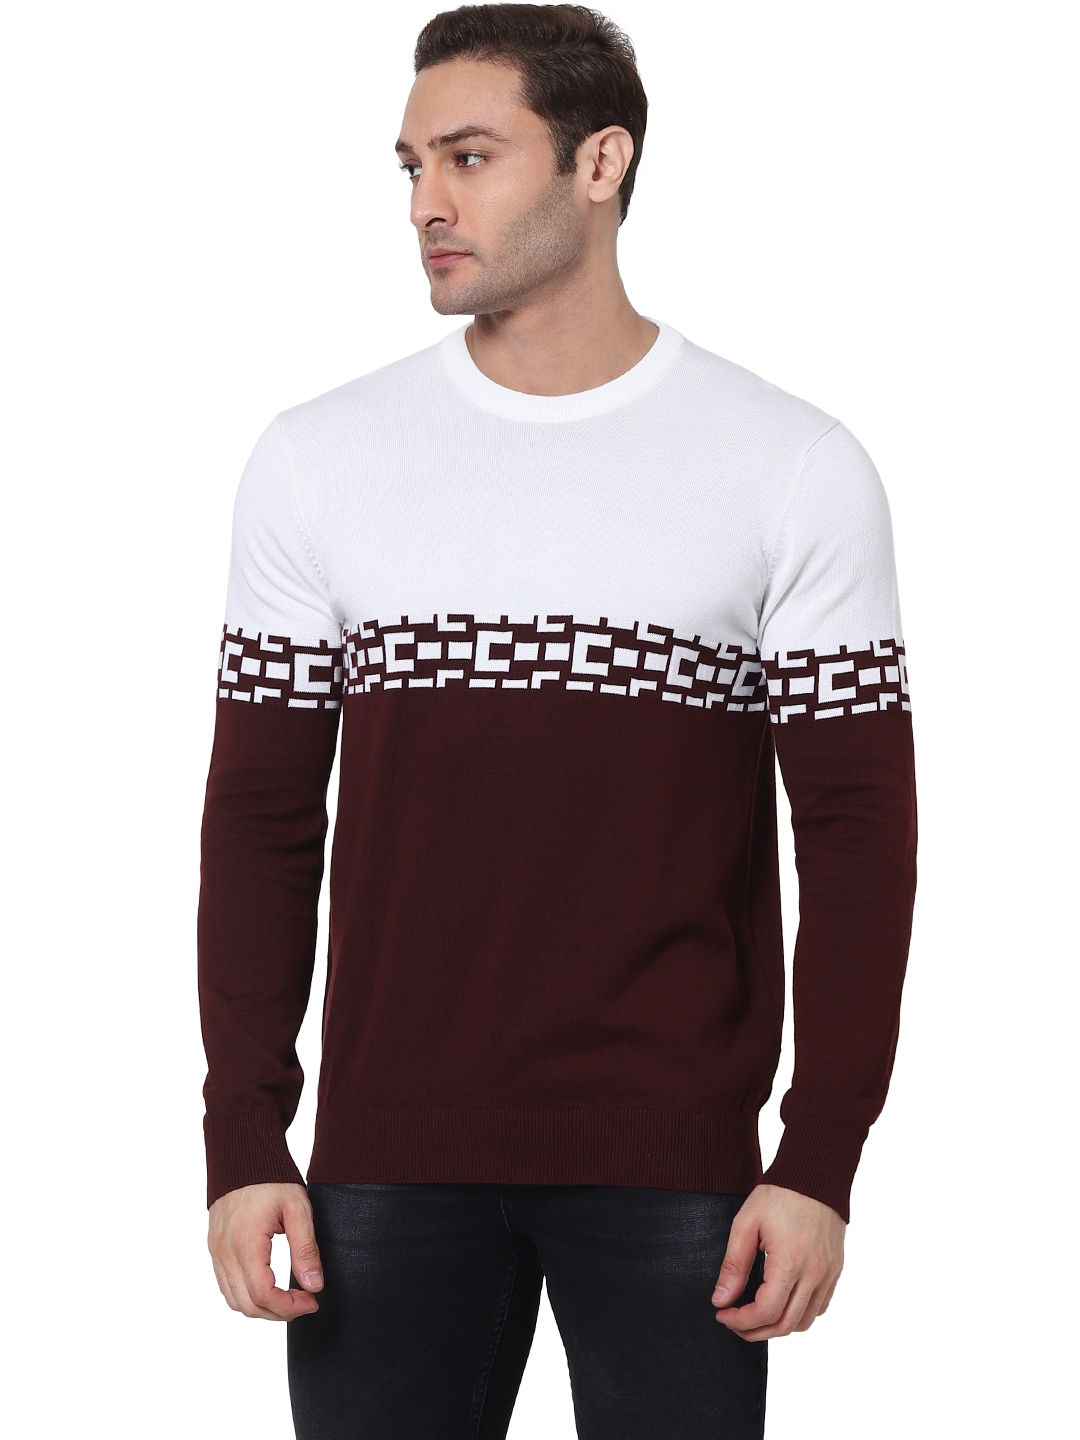 Men's Burgundy Colourblock Sweaters